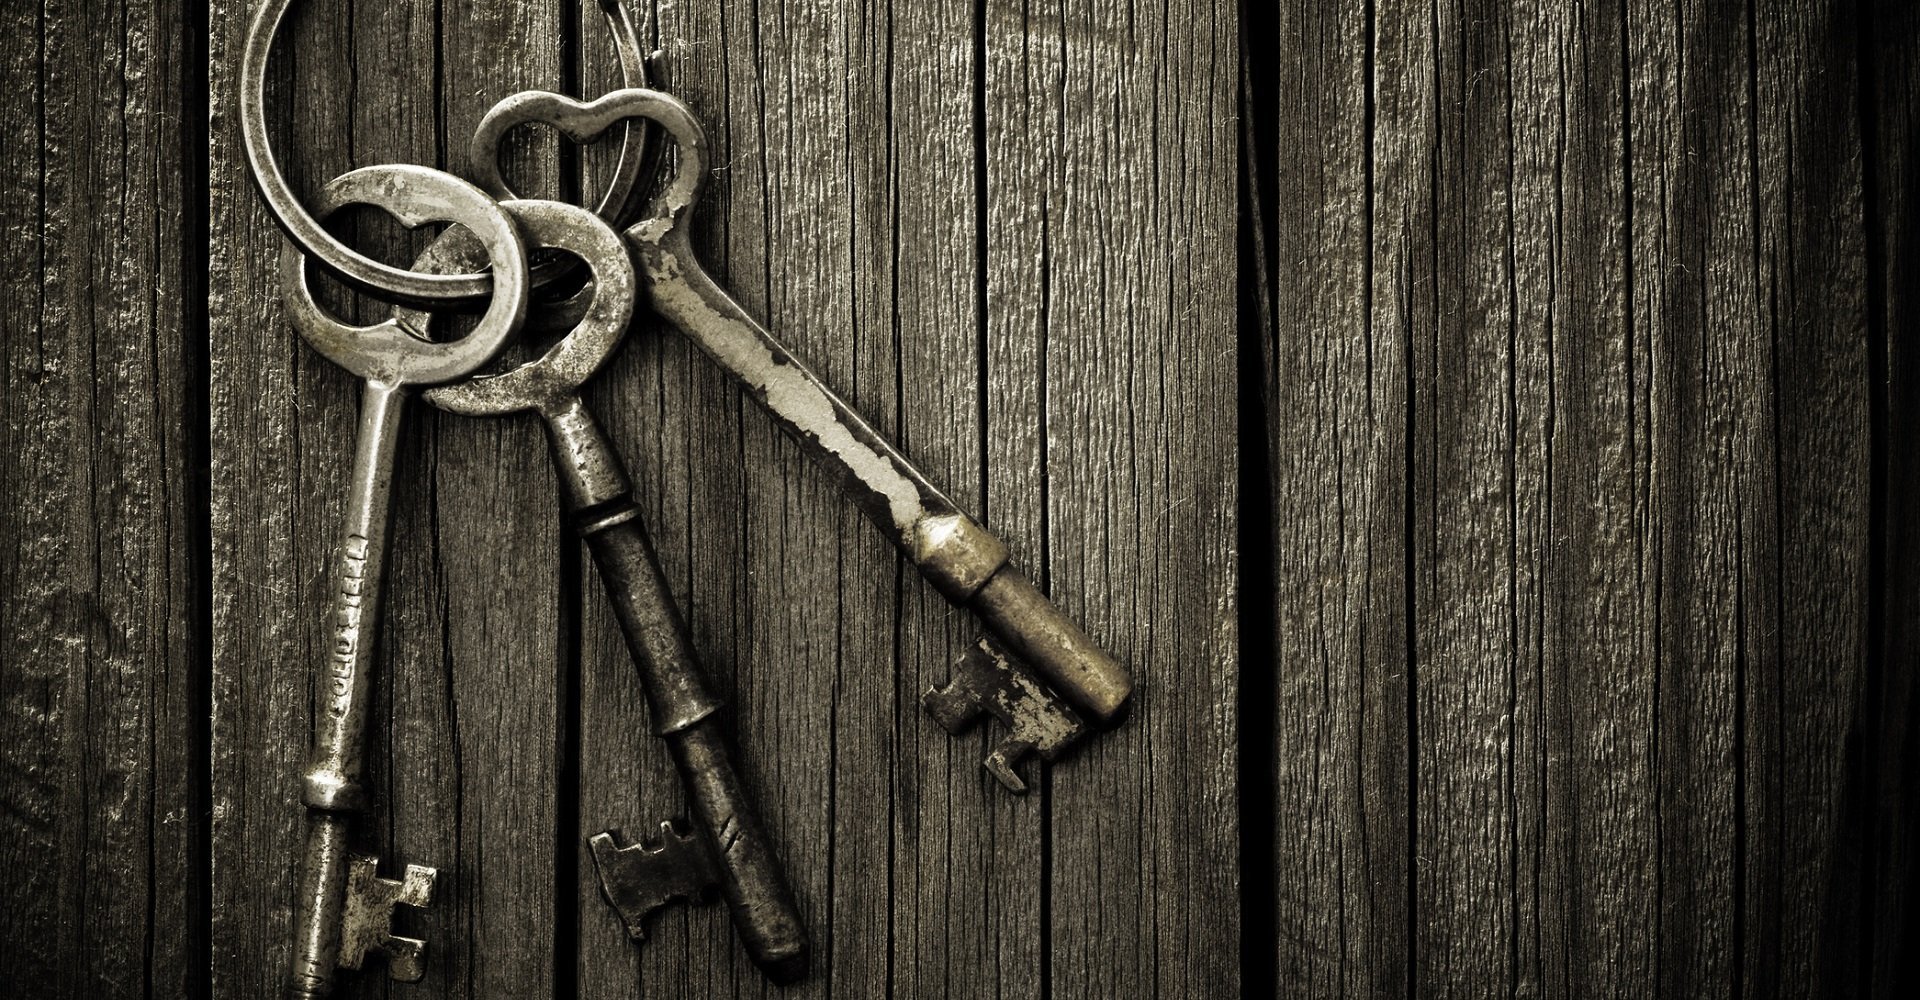 Ключи стучи. Связка ключей. Старинный ключ. Связка старинных ключей. Красивый старинный ключ.